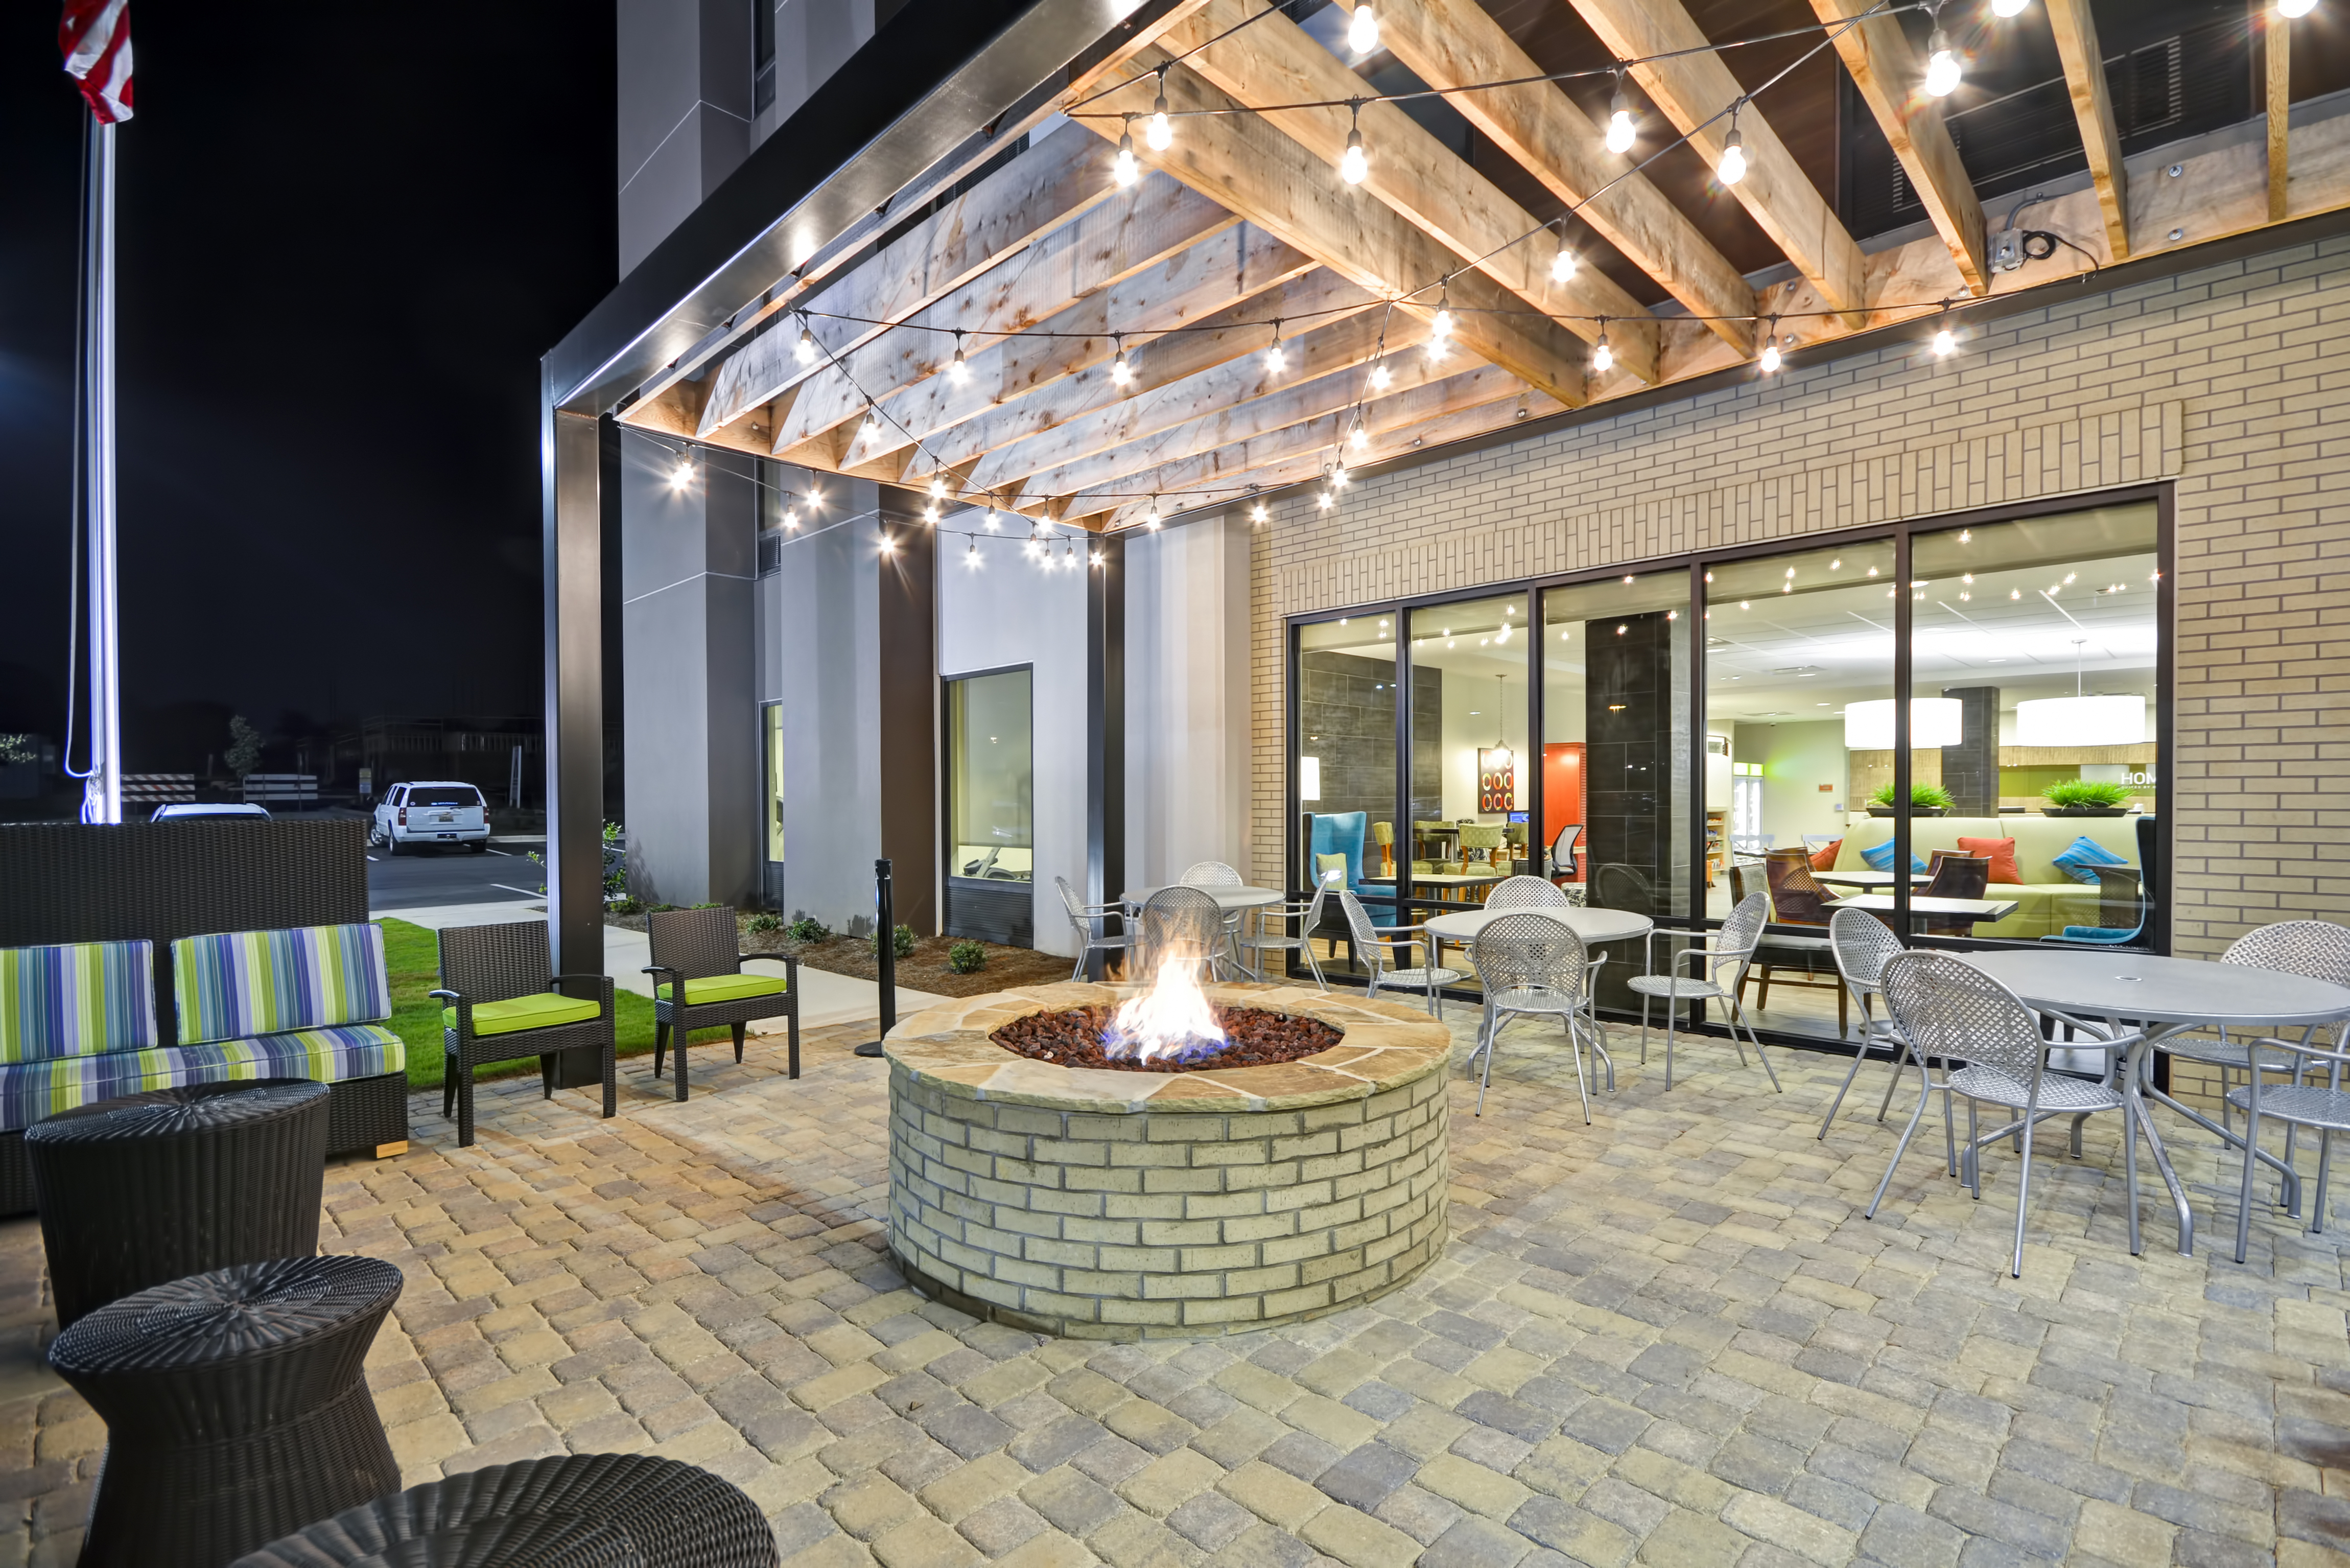 Home2 Suites by Hilton Opelika Auburn Hotel, AL - Outdoor Lounge